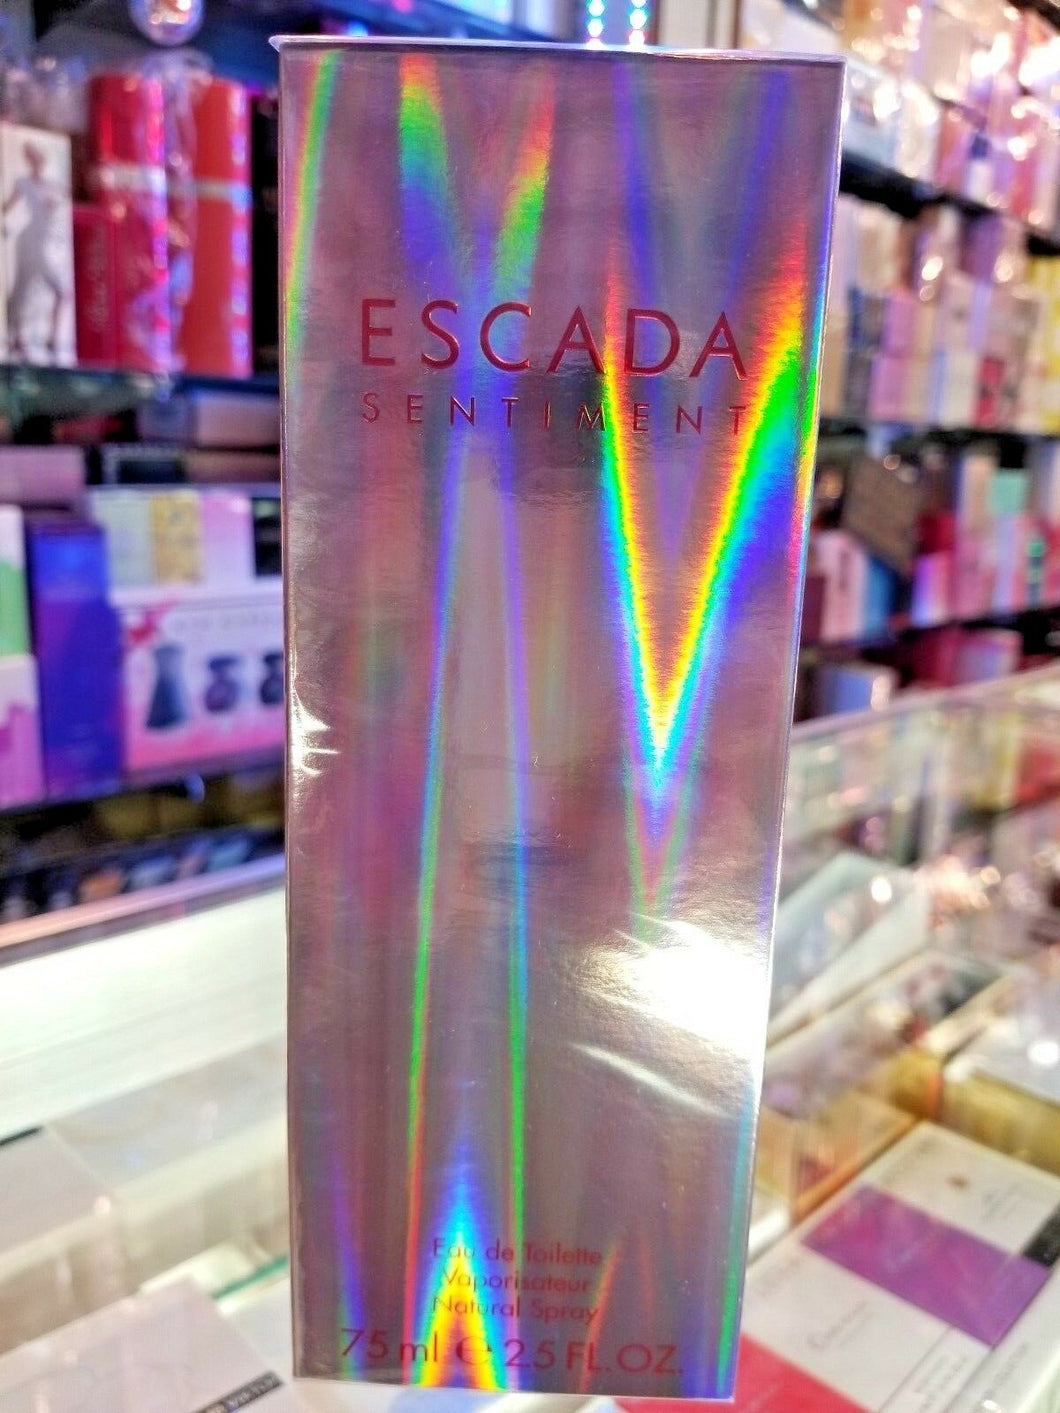 ESCADA Sentiment for Women 2.5 oz 75 ml EDT Eau de Toilette Spray for Her SEALED - Perfume Gallery